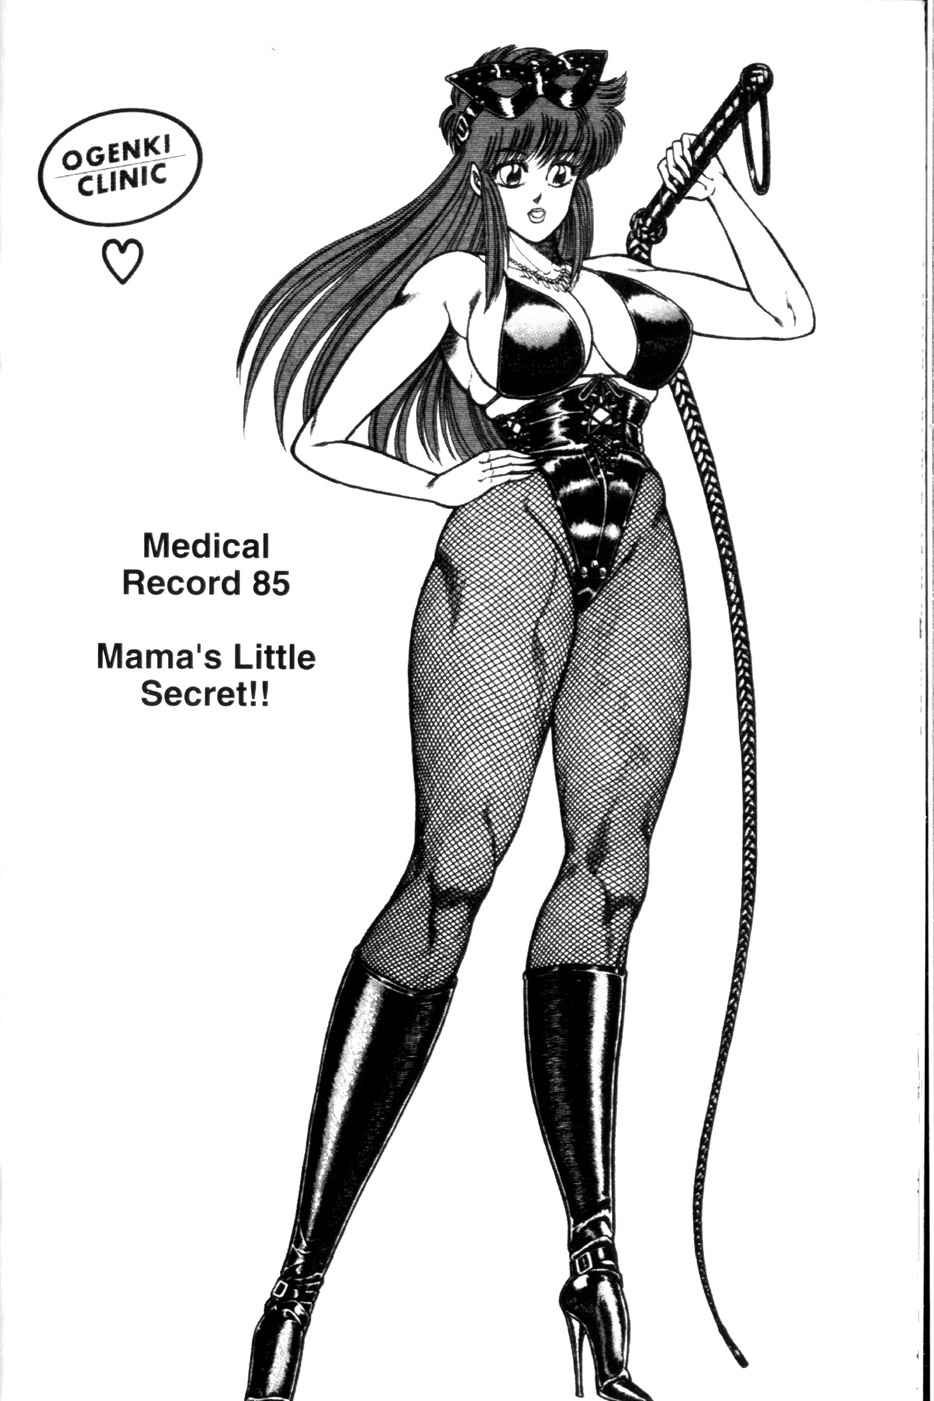 Ogenki Clinic Vol.6 134 hentai manga